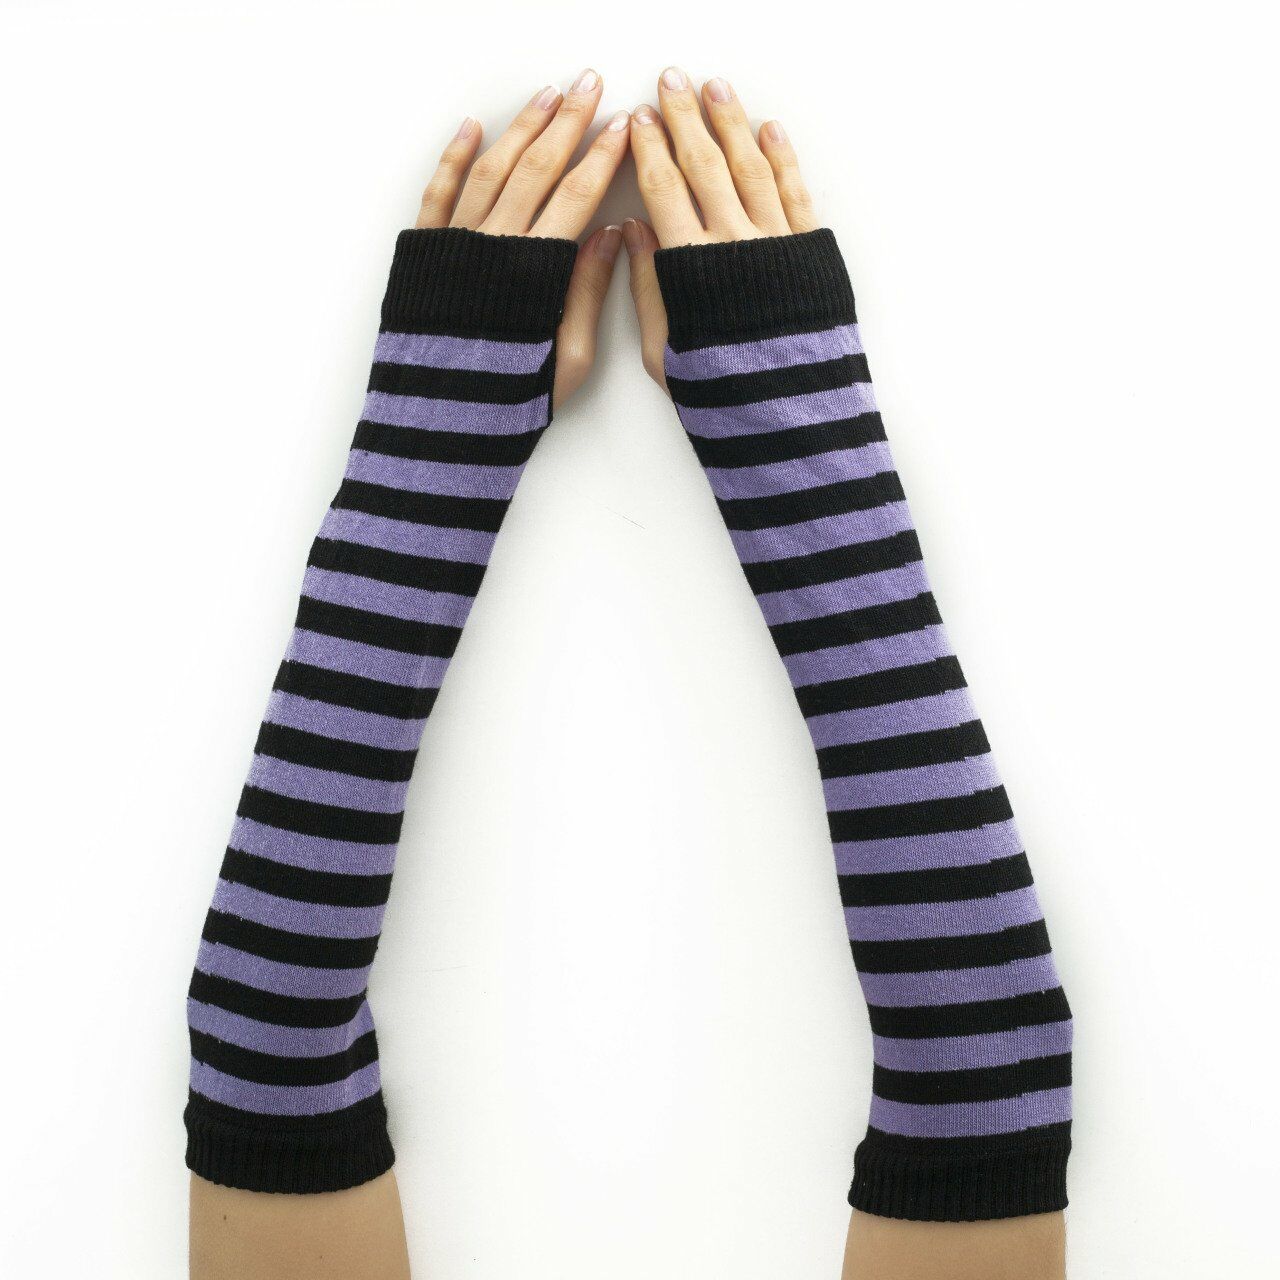 Siyah Lila Renkli Kol Çorabı Eldiven